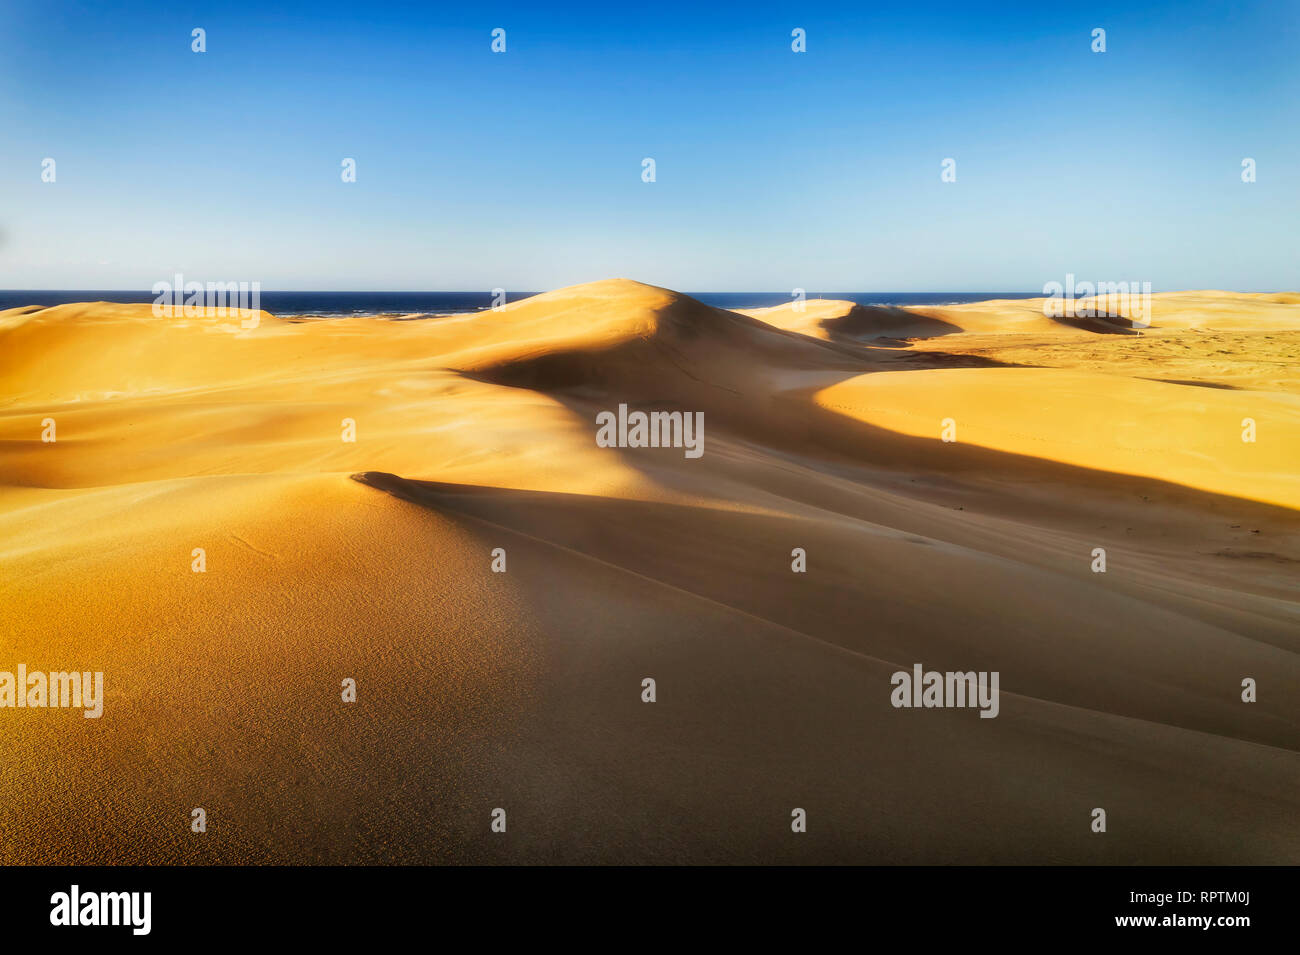 Yellow sun lit sands in arid desert climate of dunes around Stockton beach on Pacific coast of Australia - view against horizon over sea under blue sk Stock Photo